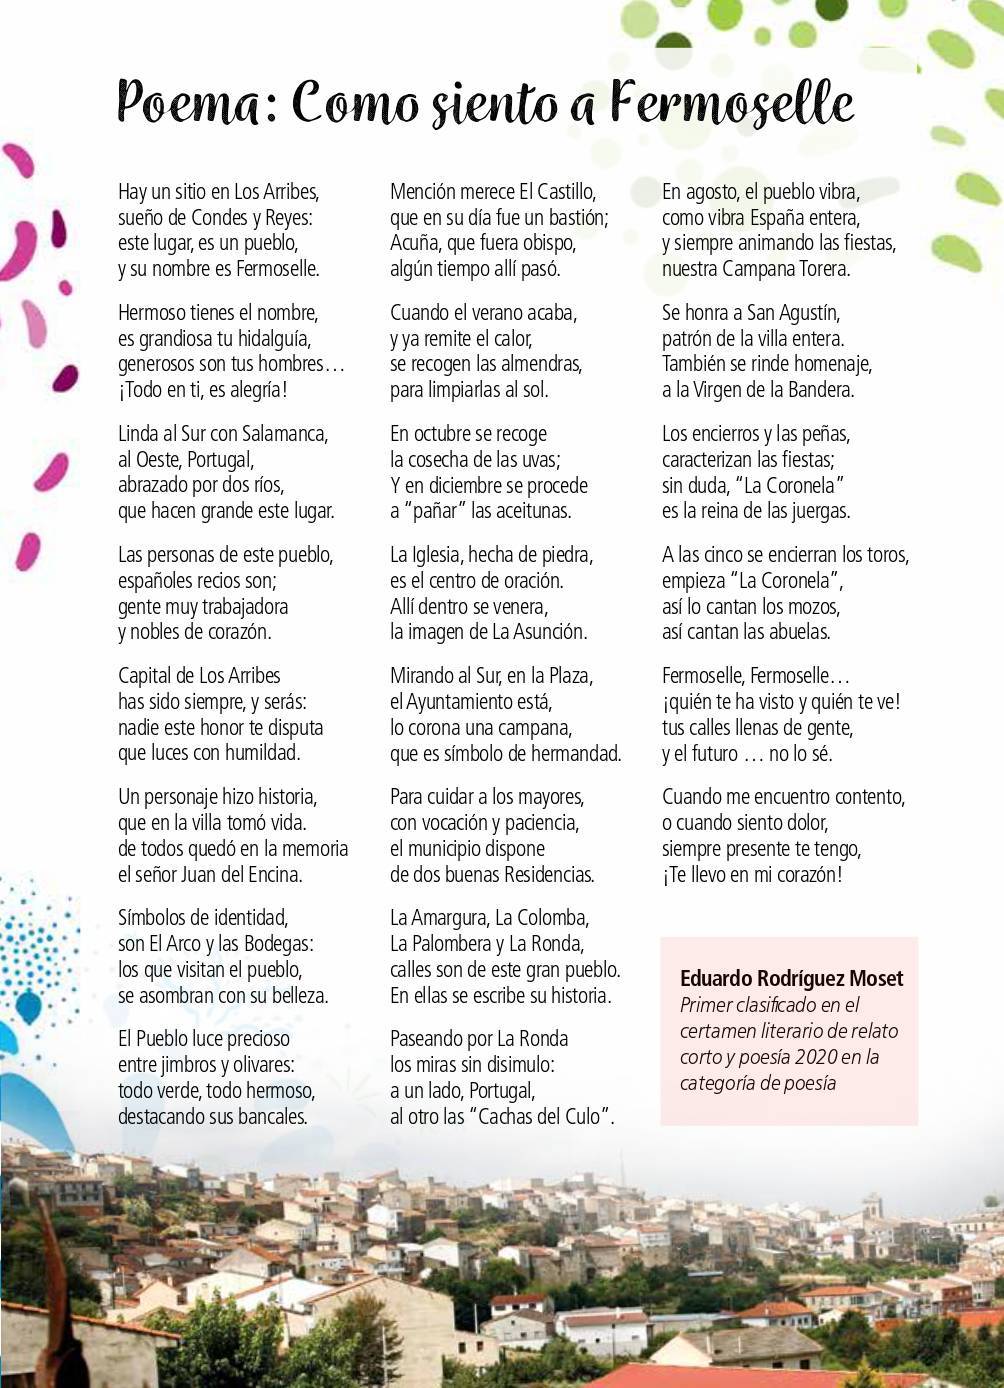 Programa de ferias y fiestas de San Agustín (2021) - Fermoselle (Zamora) 5